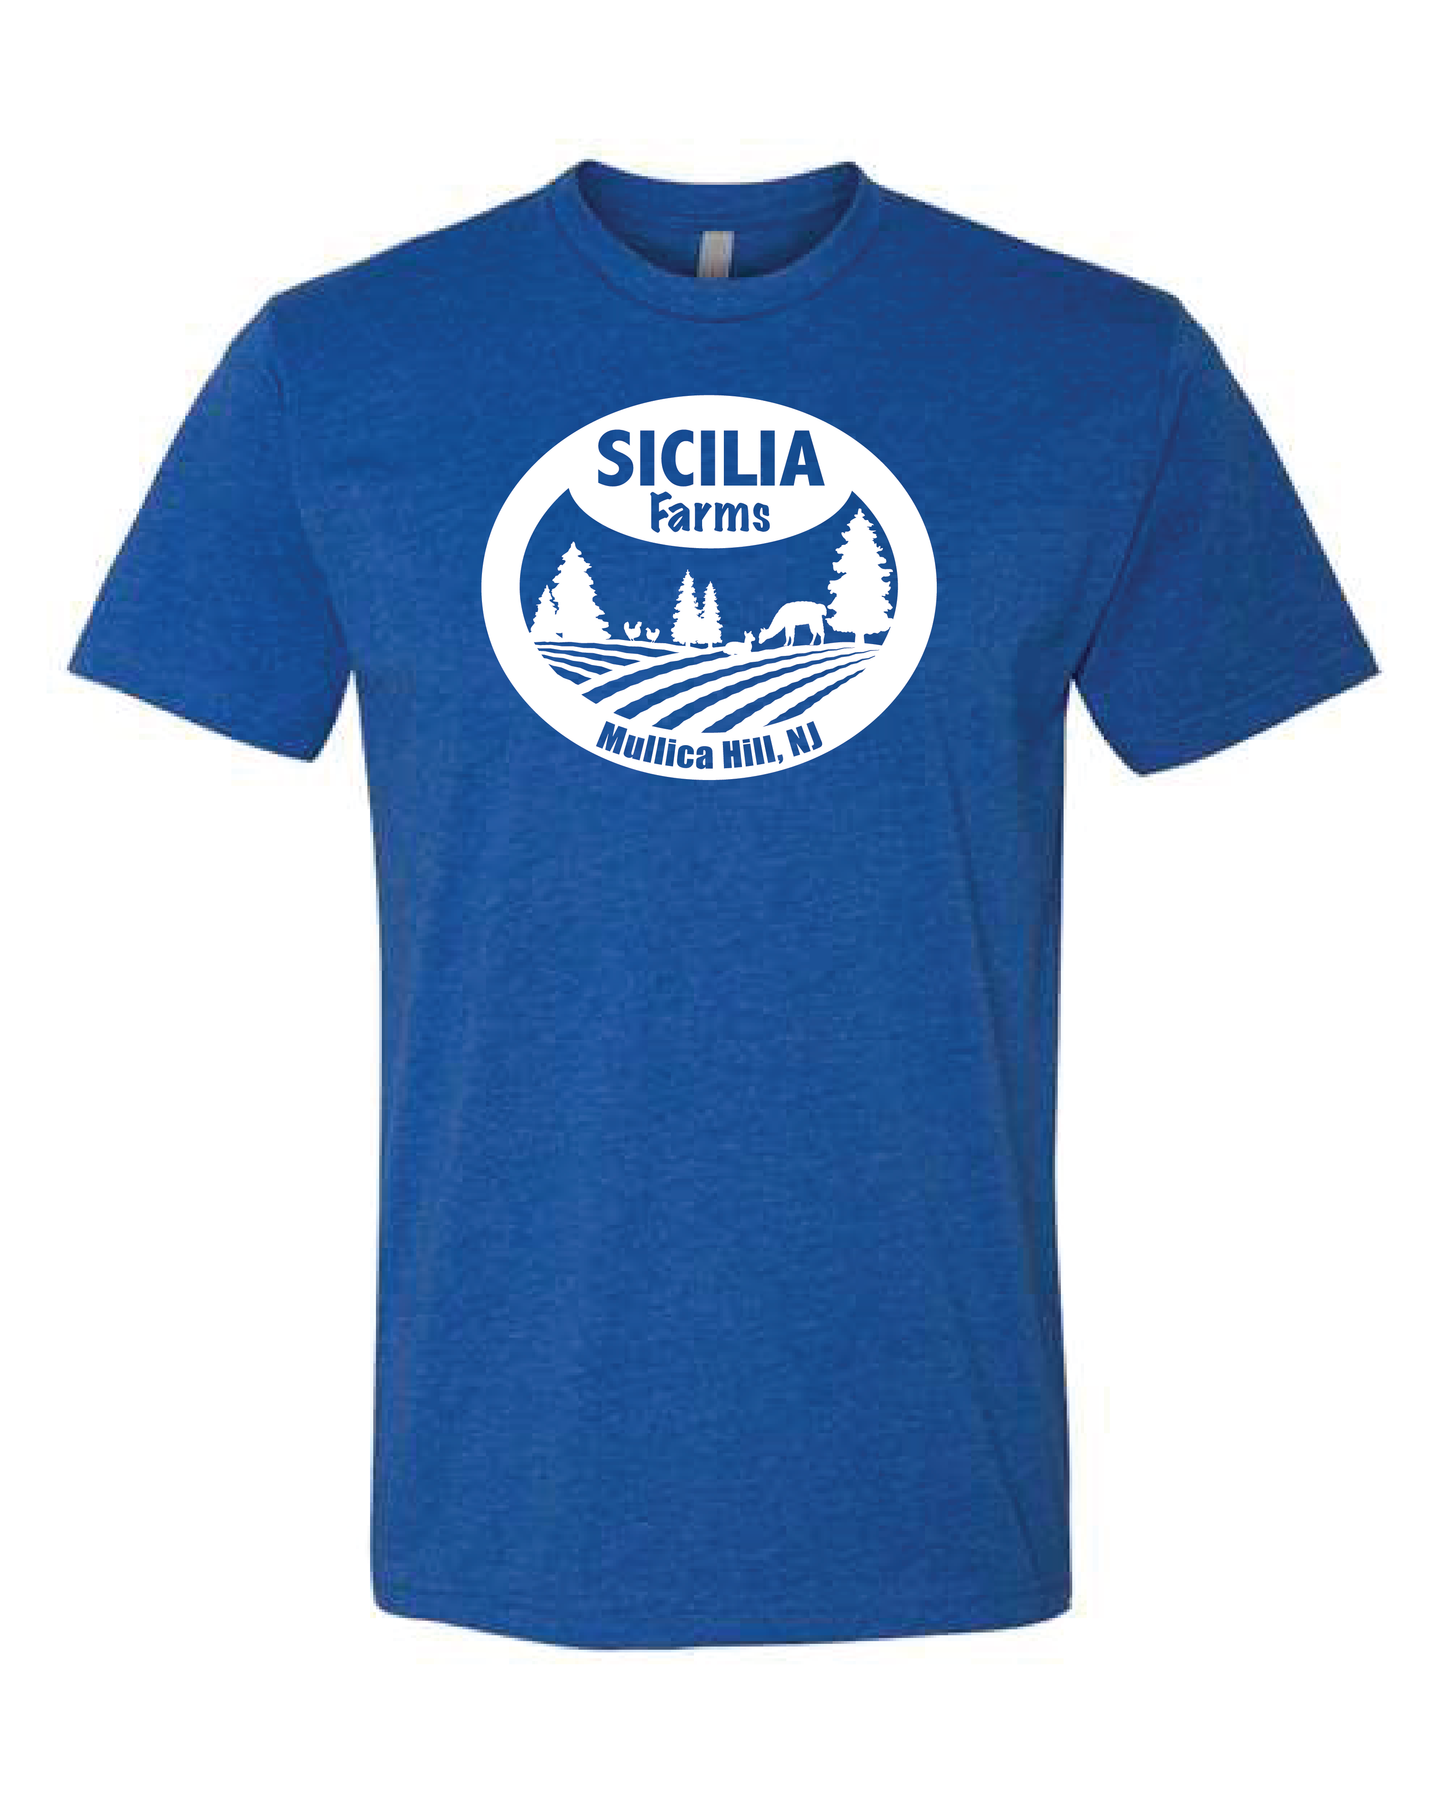 Sicilia Farms White Logo - Premium CVC T-Shirt